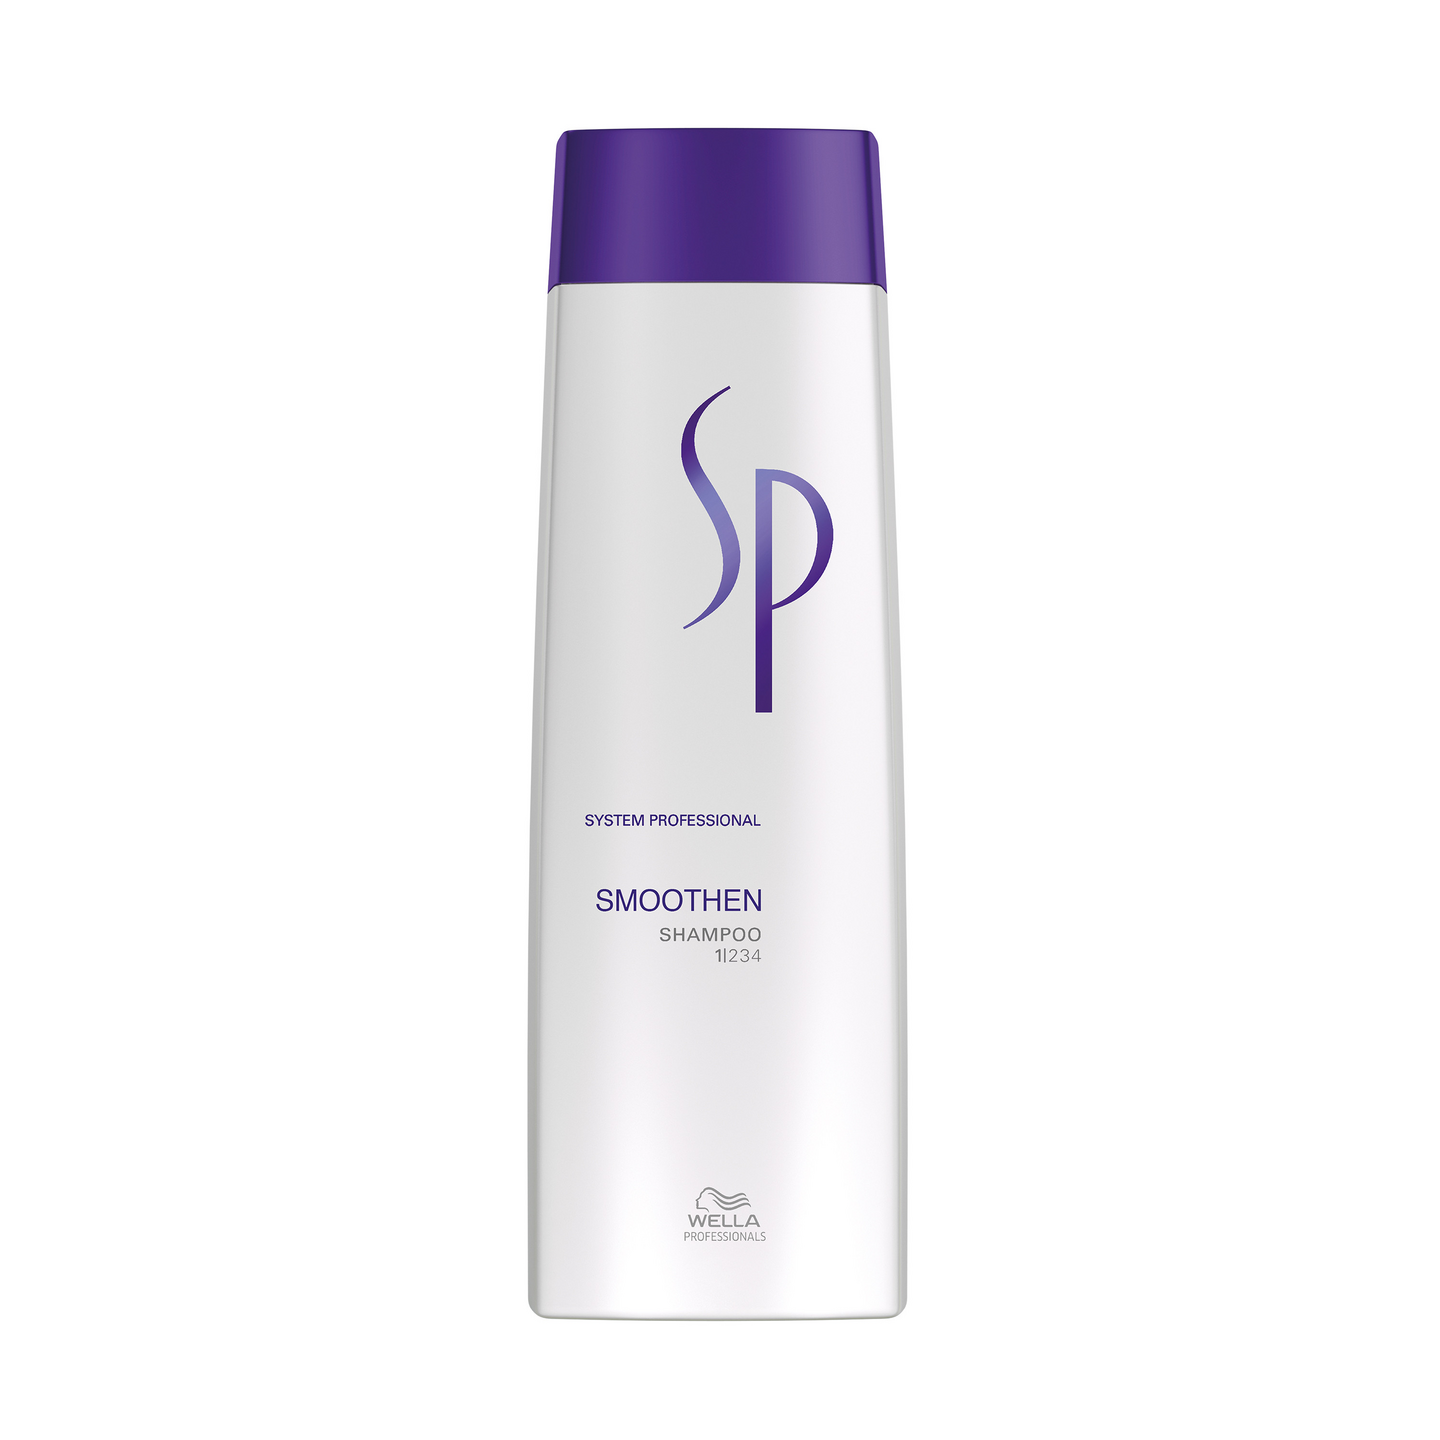 Wella Professional SP shampoo 250ml Smoothen